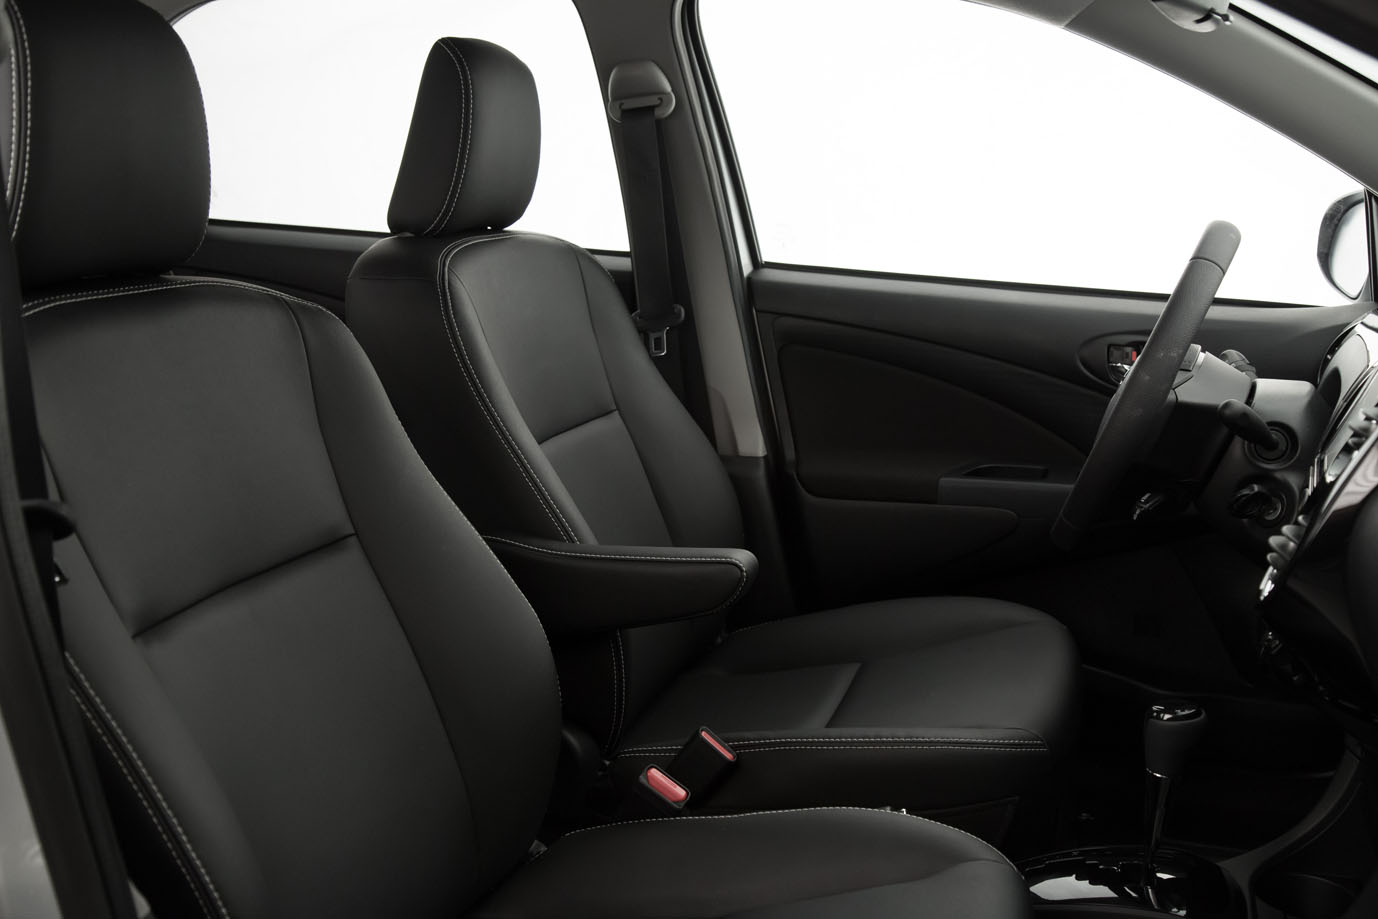 Toyota, Toyota Etios Facelift Arm Rest: Toyota Etios Facelift Diluncurkan Dengan Ubahan Fokus Pada Interior